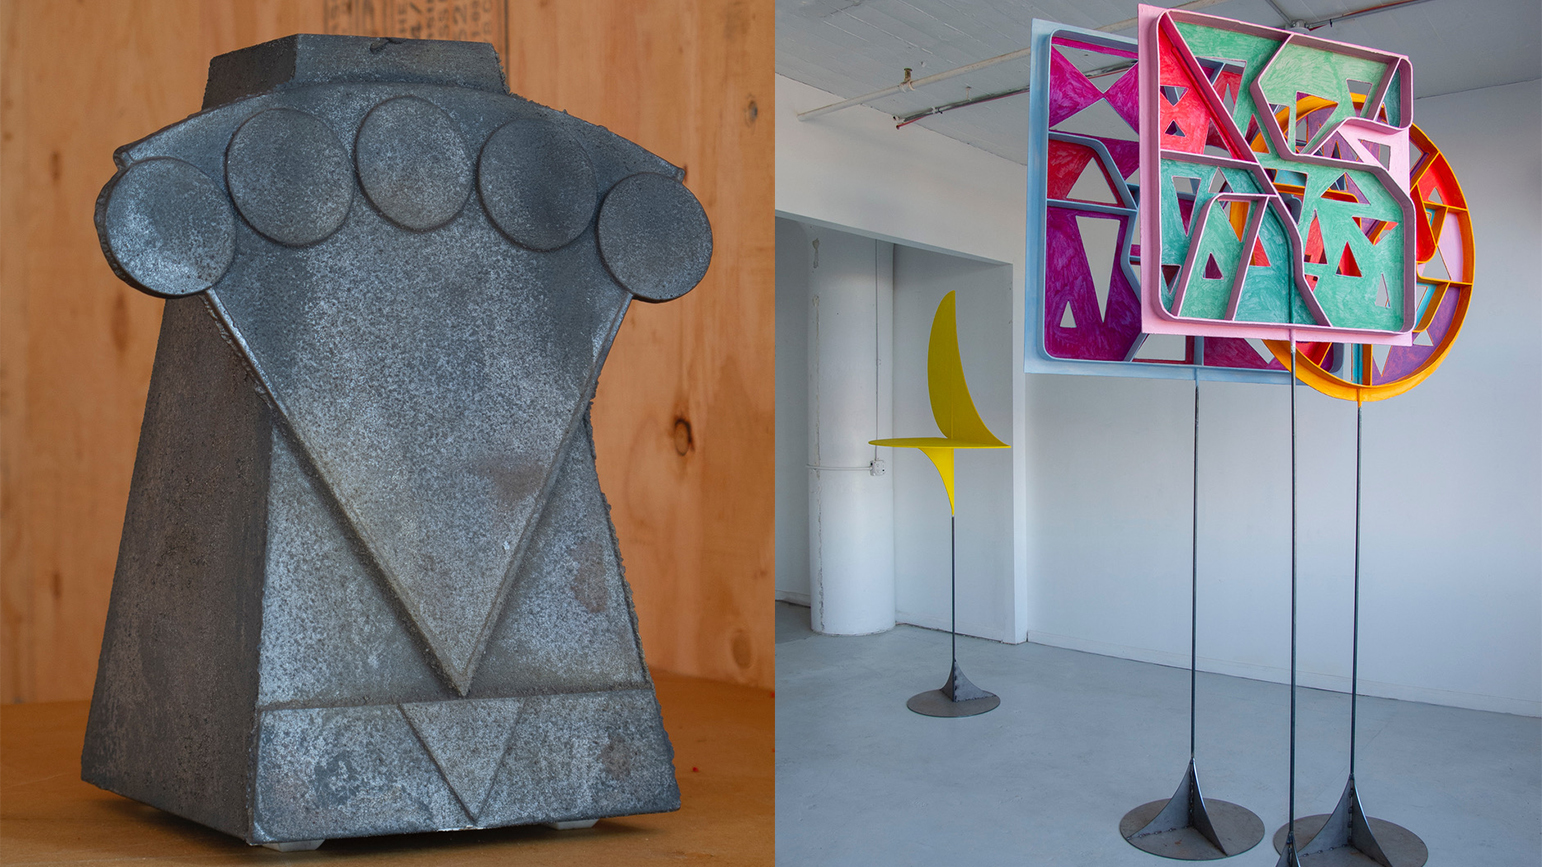 Two sculptures by Halsey Rodman